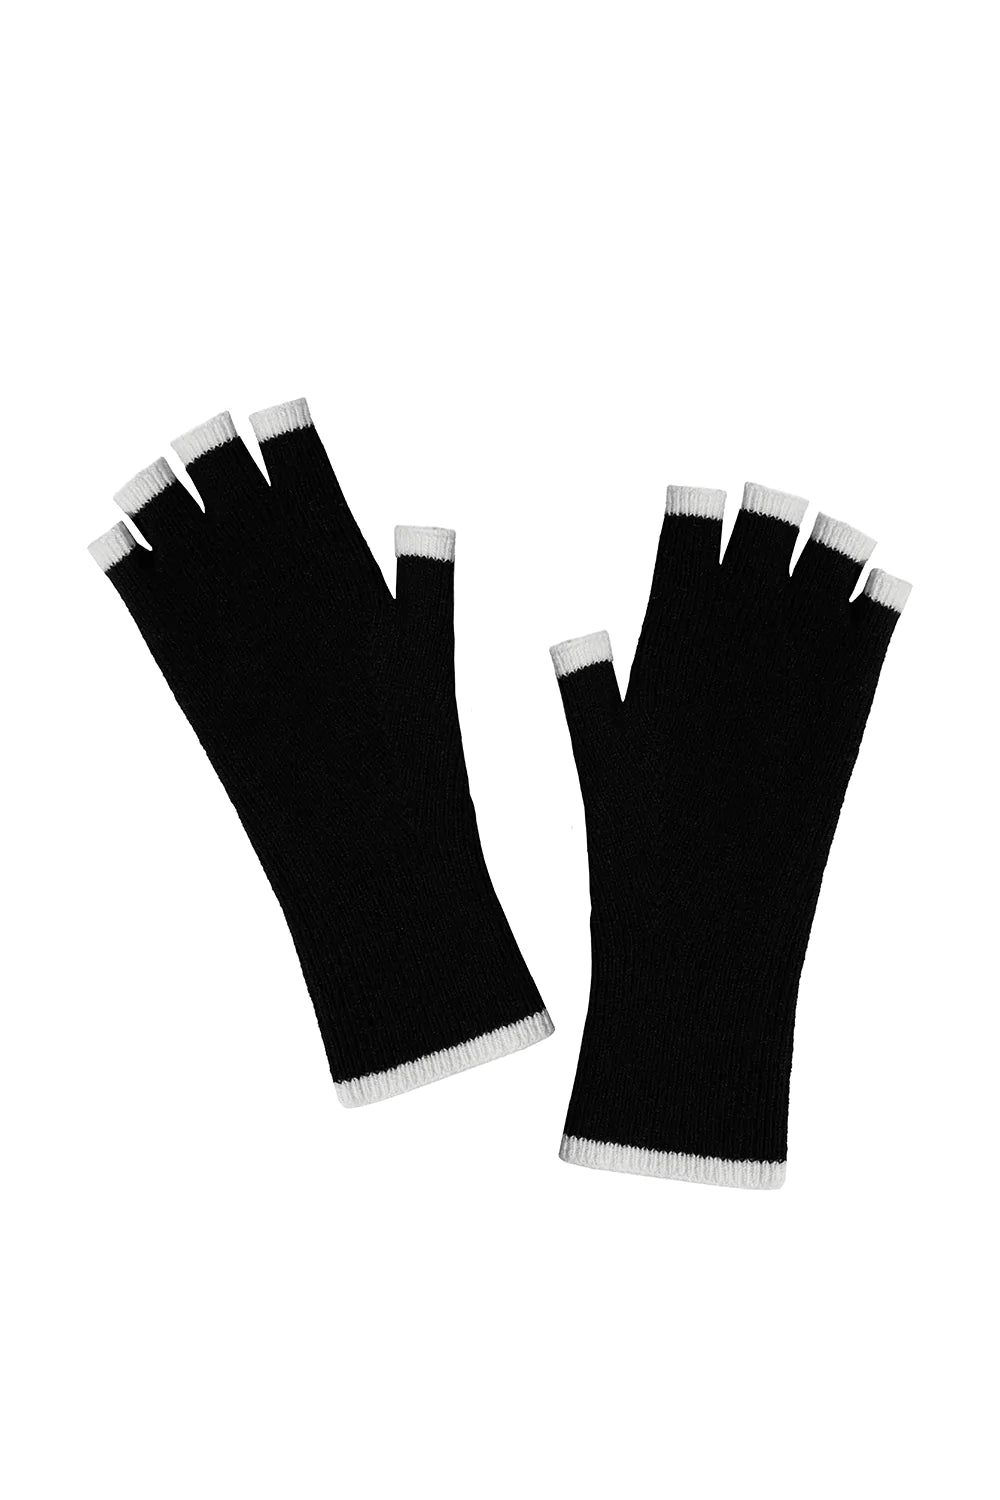 Parrish LA Chapman Fingerless Glove